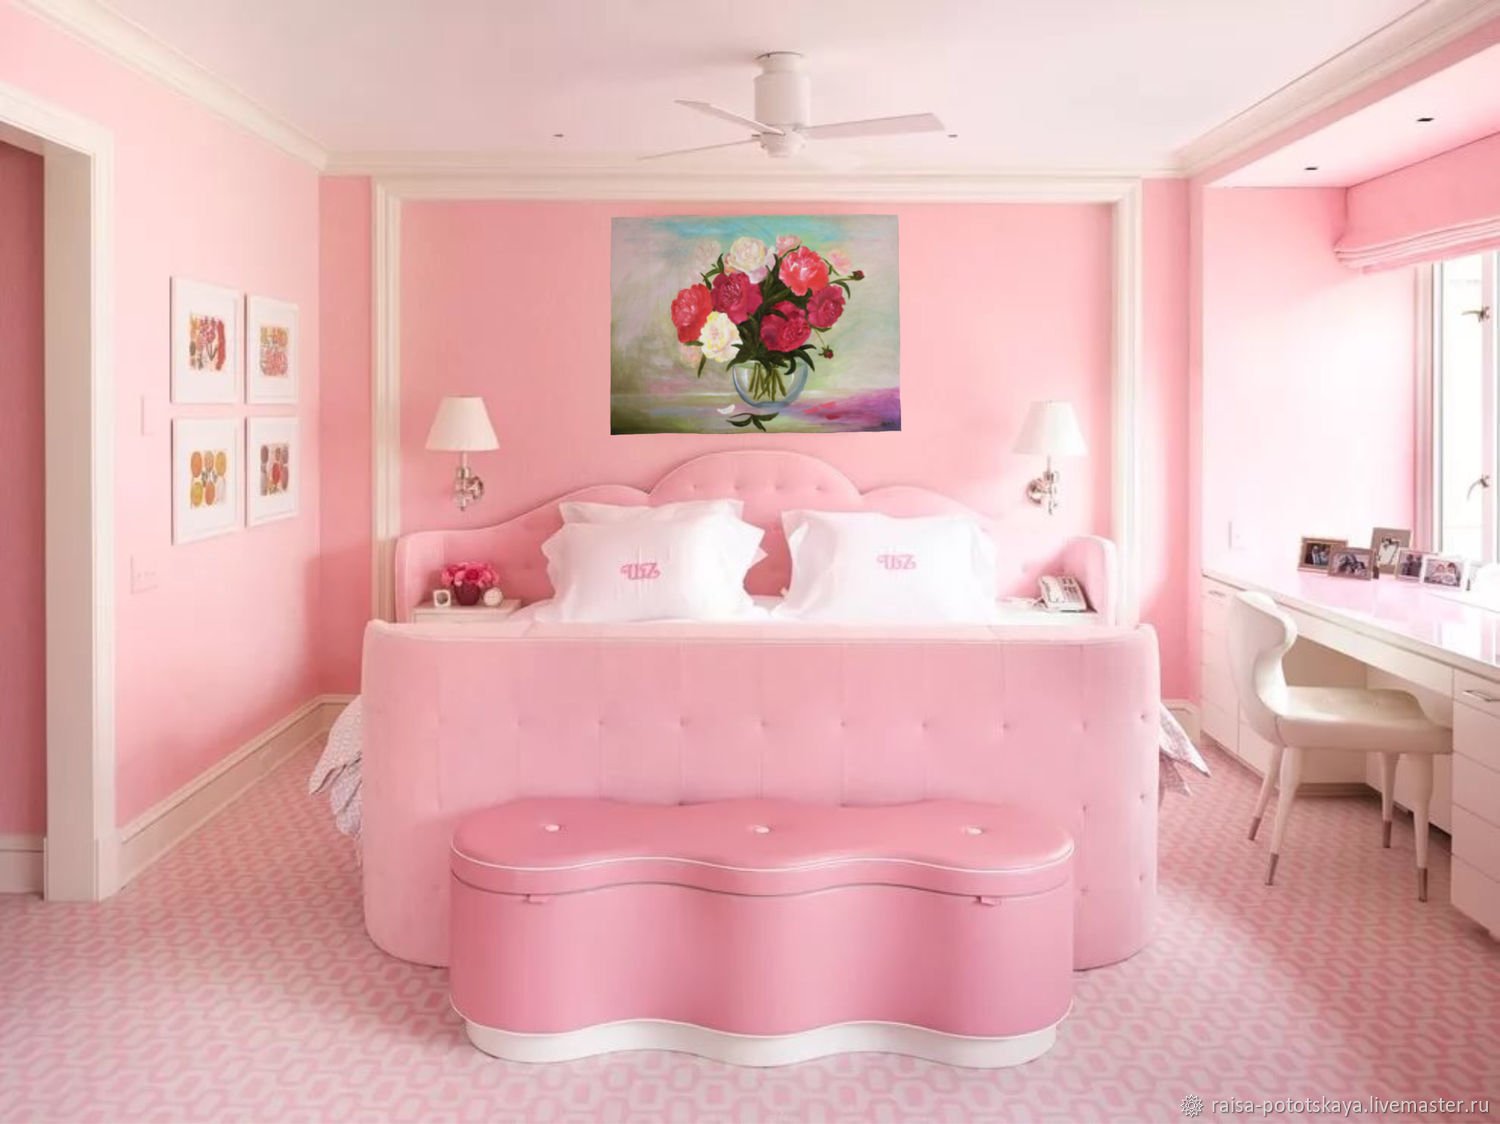 Комната в розовых тонах. Розовая комната для девочки. Спальня для девочки в розовых тонах. Комната для девочки розового цвета. Спальня в розовых тонах.